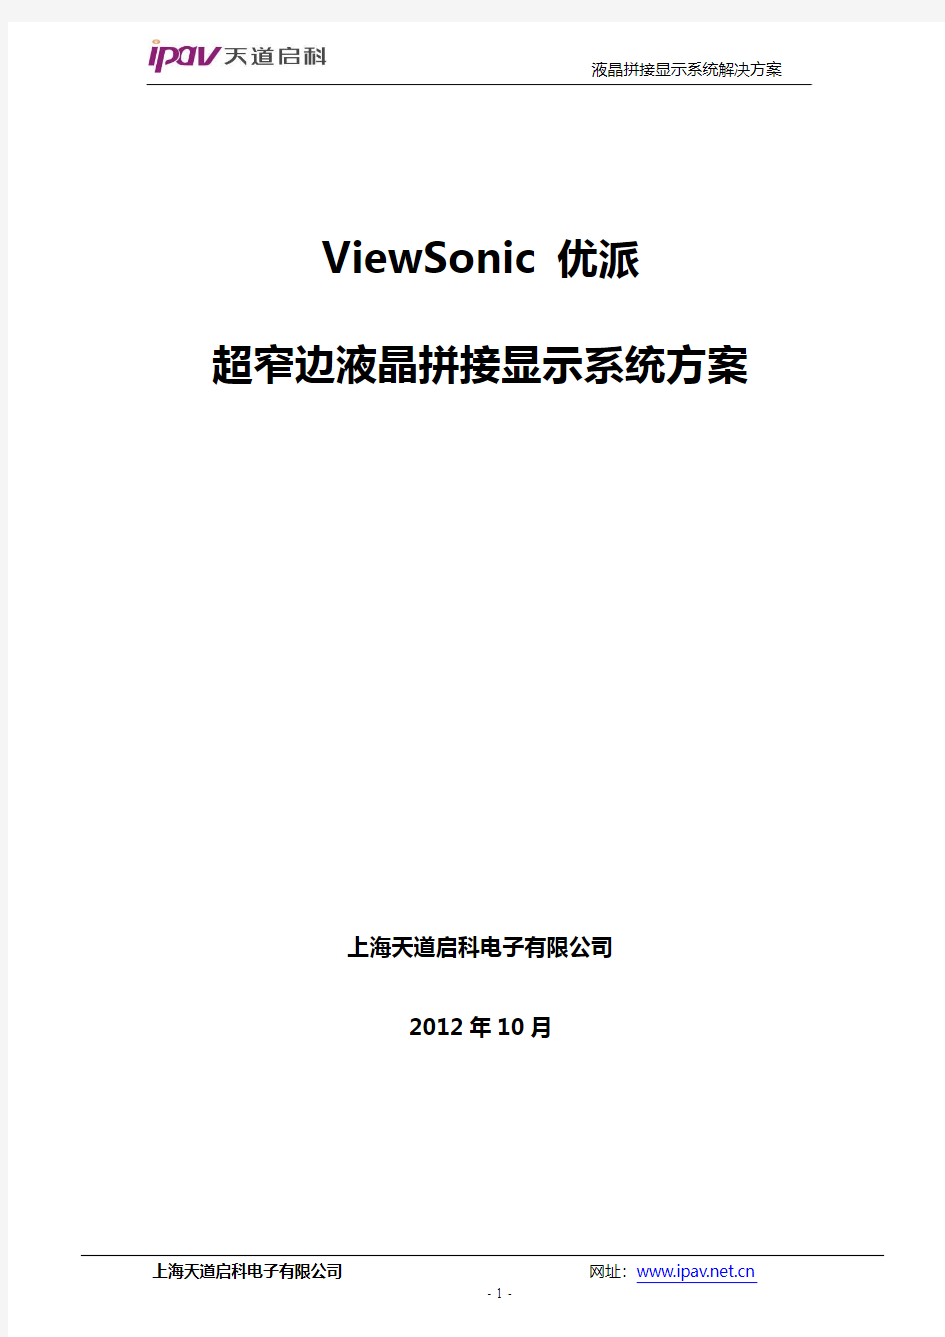 ViewSonic55寸液晶拼接系统方案